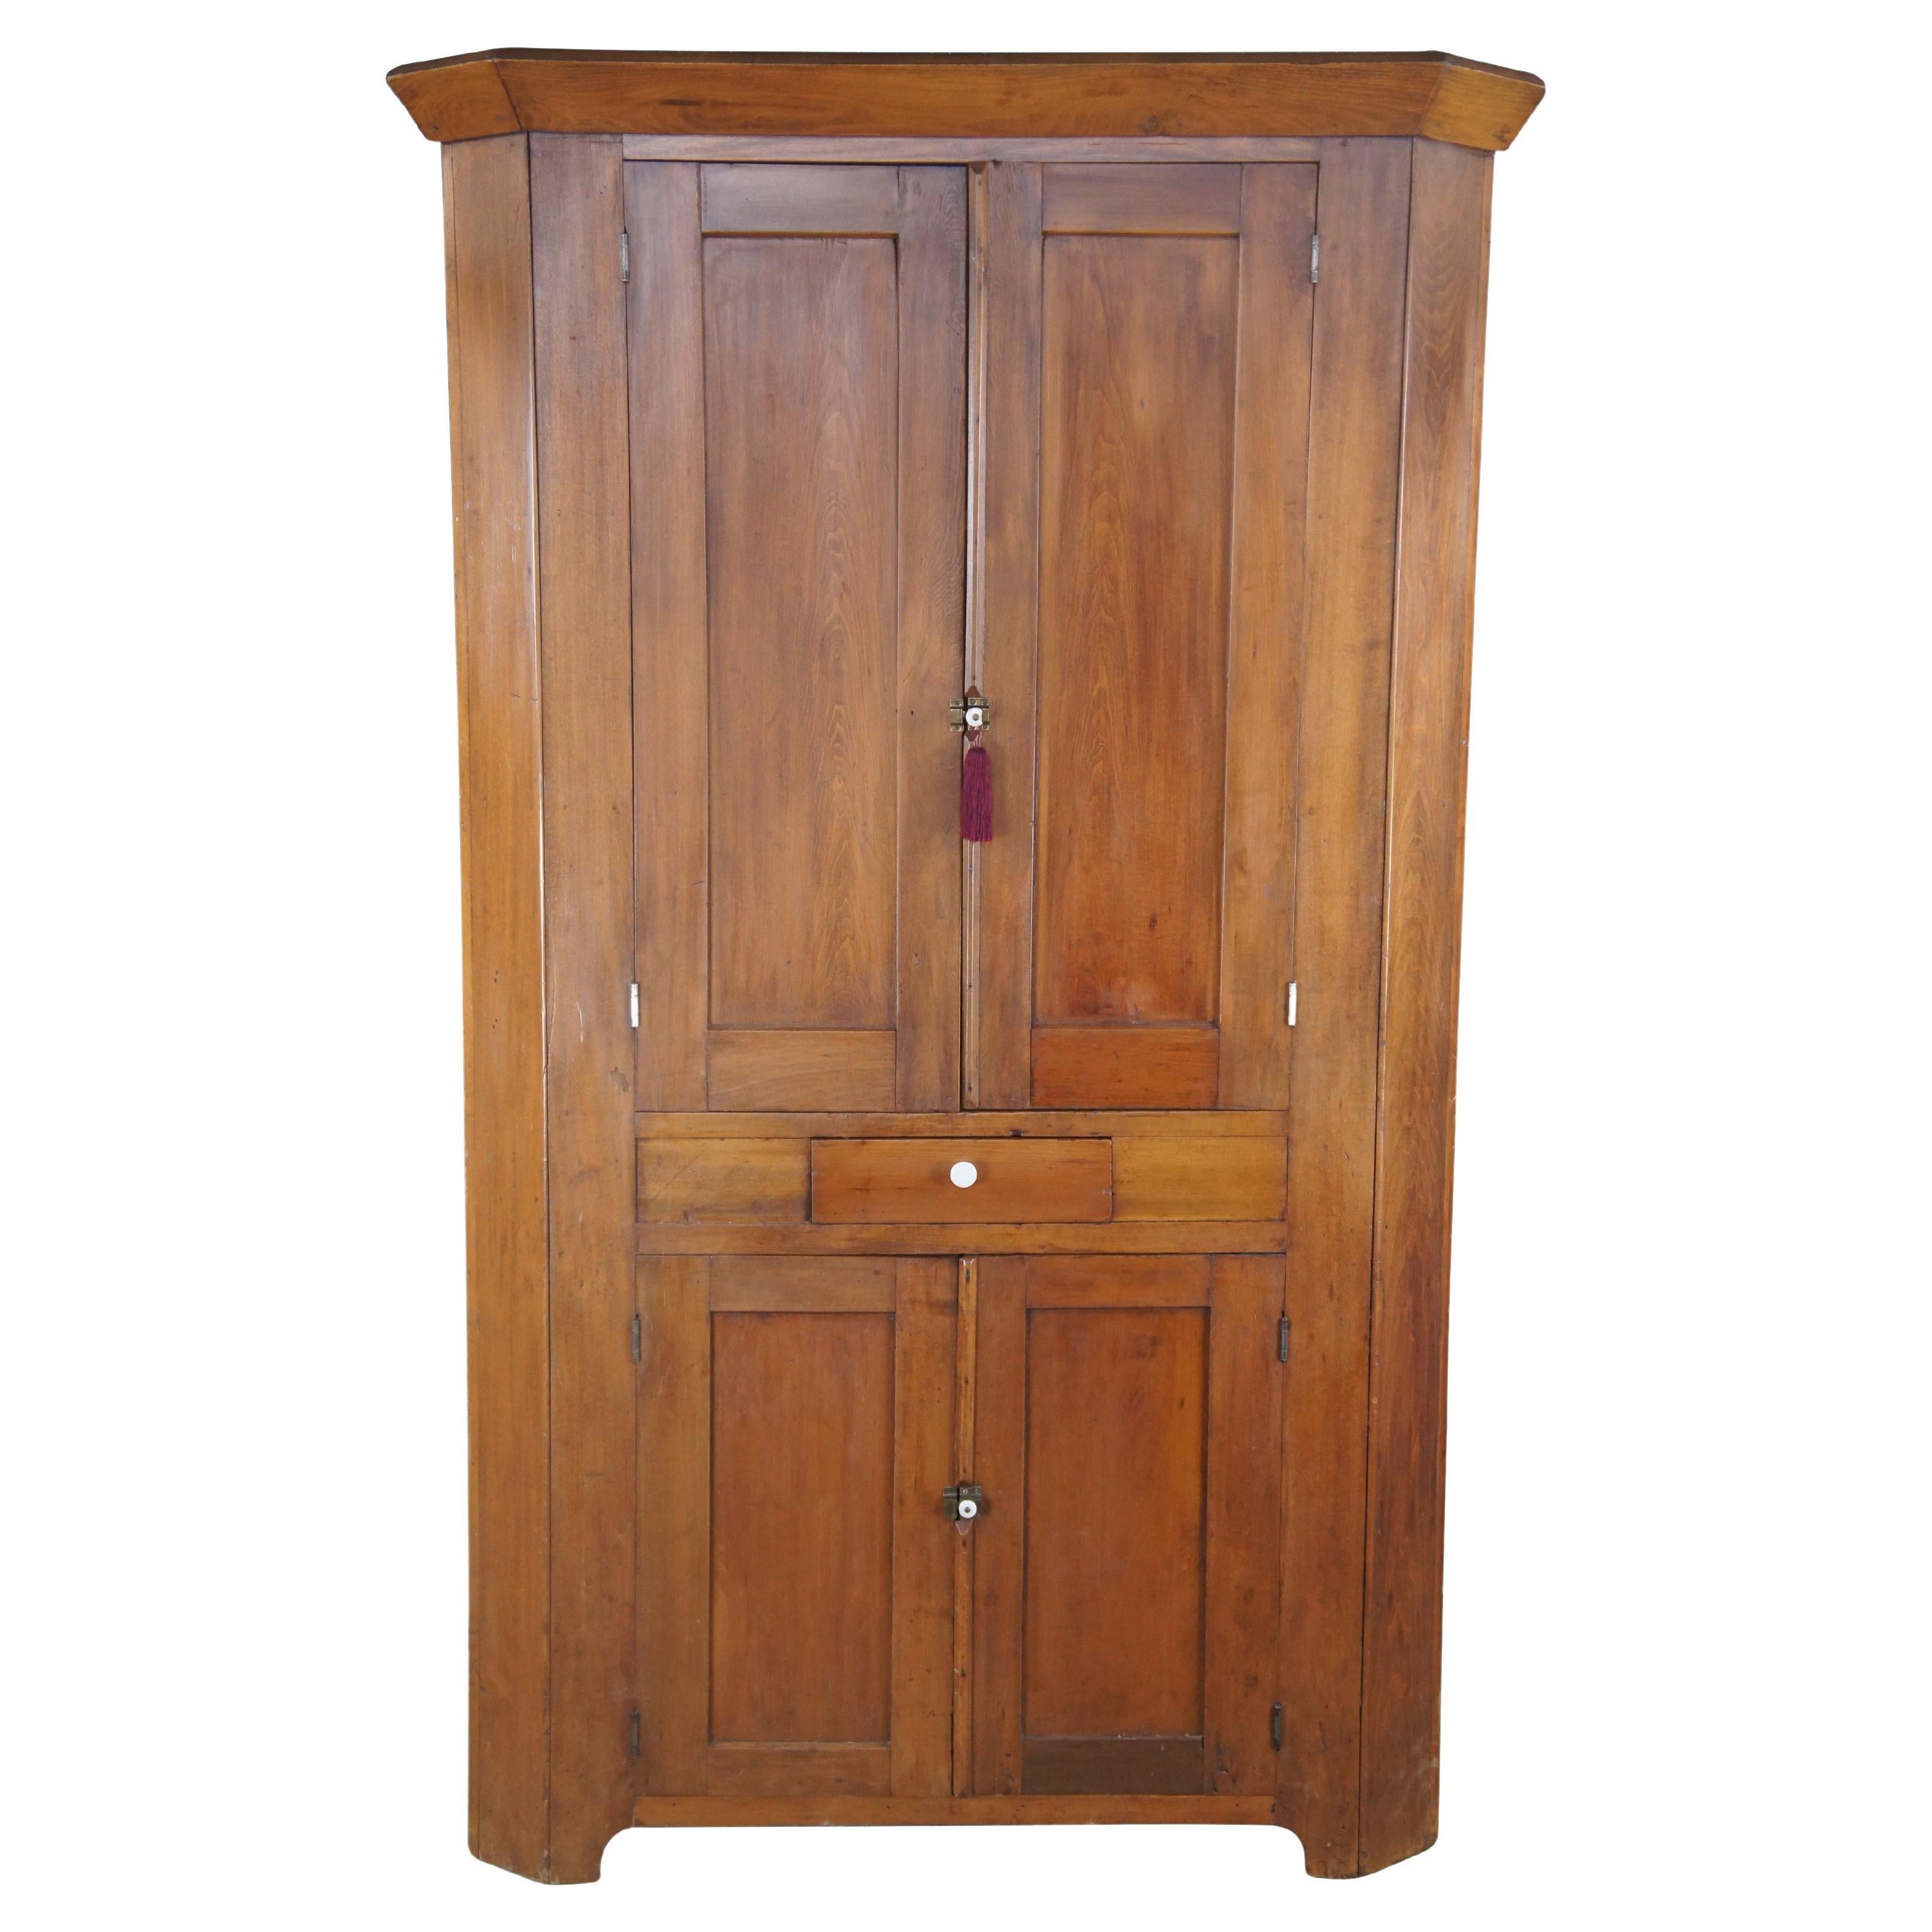 Primitive Antique 19th C. American Walnut Distressed Corner Cabinet Cupboard